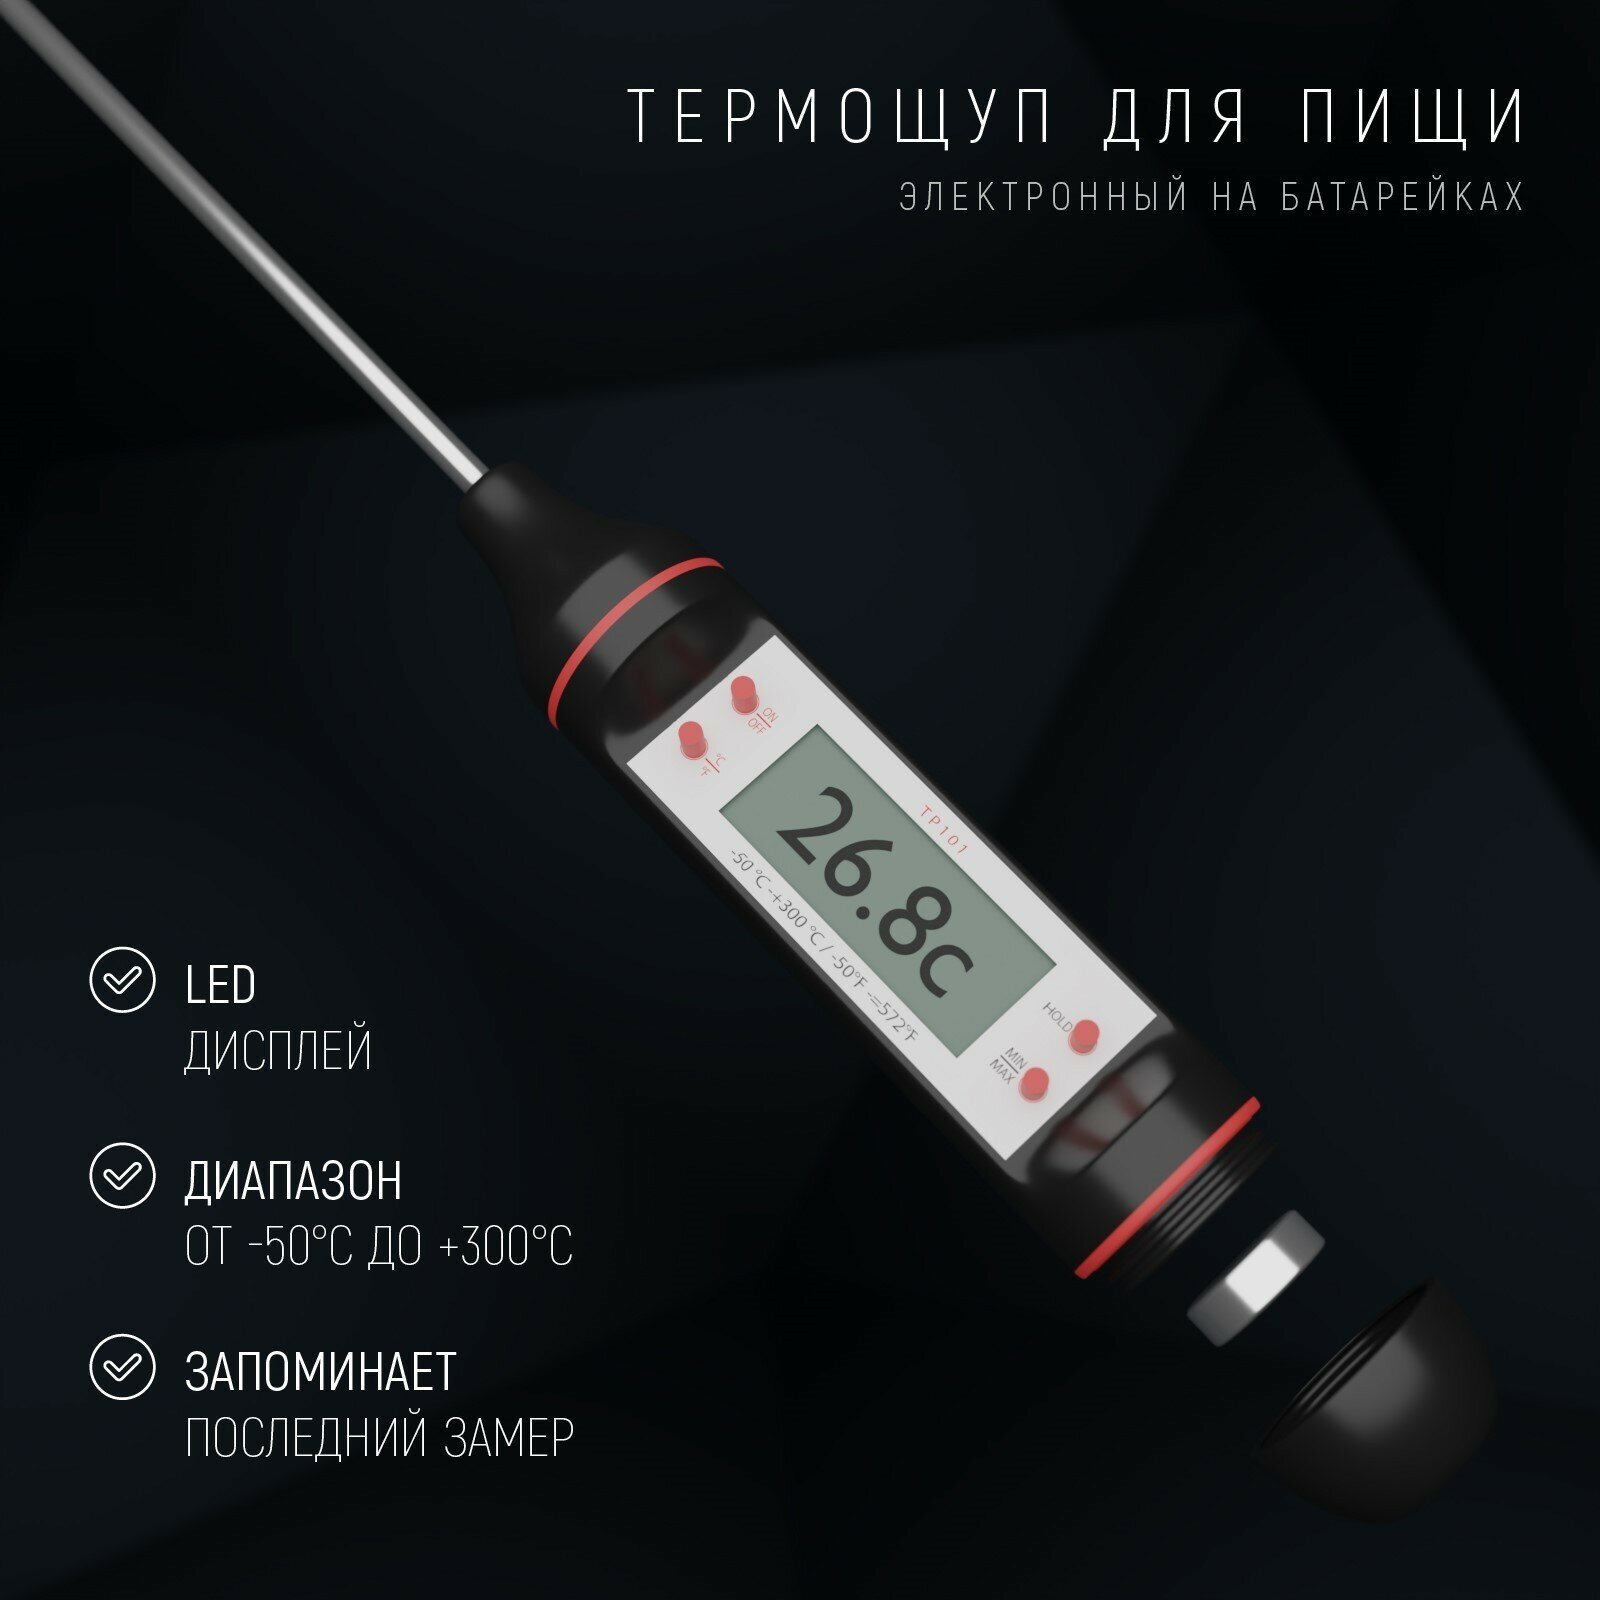 Термометр-зонд цифровой со щупом и жк дисплеем. Размер: 22 см